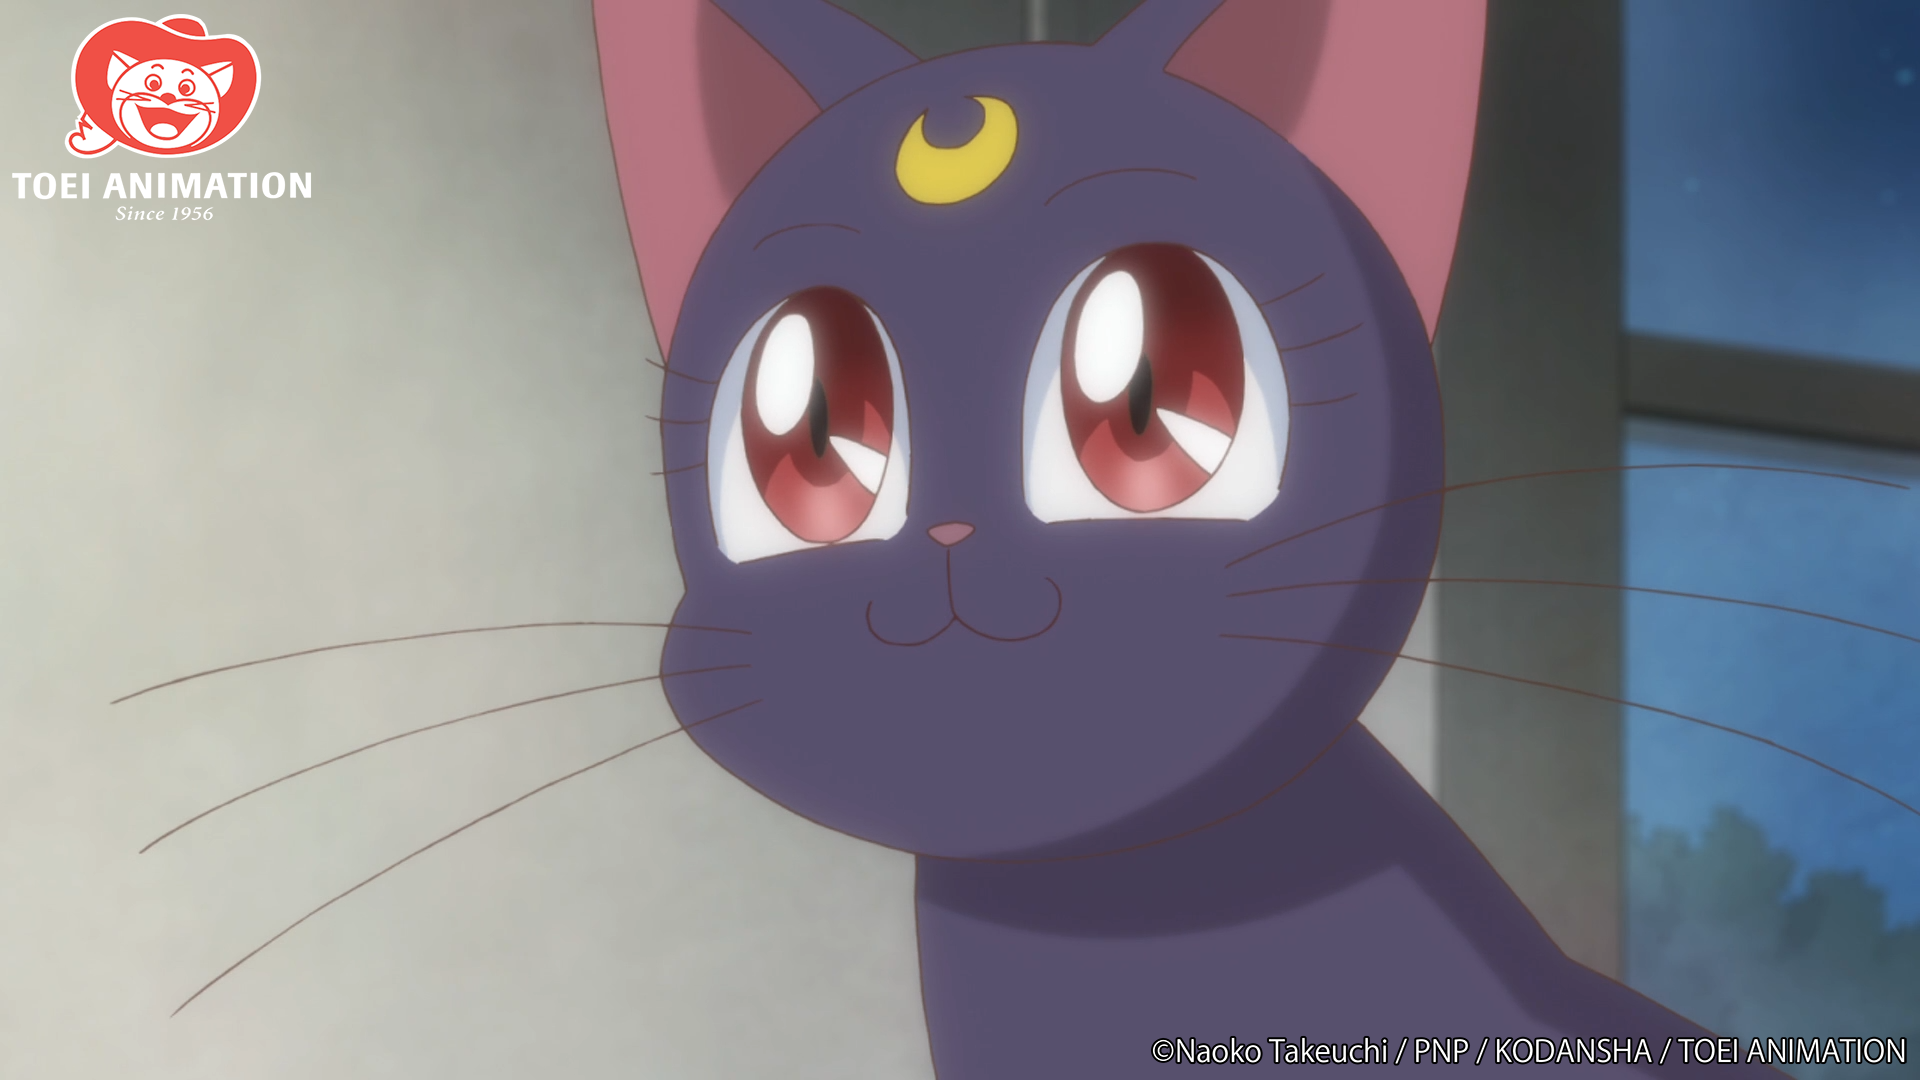 Luna smiles, Sailor Moon